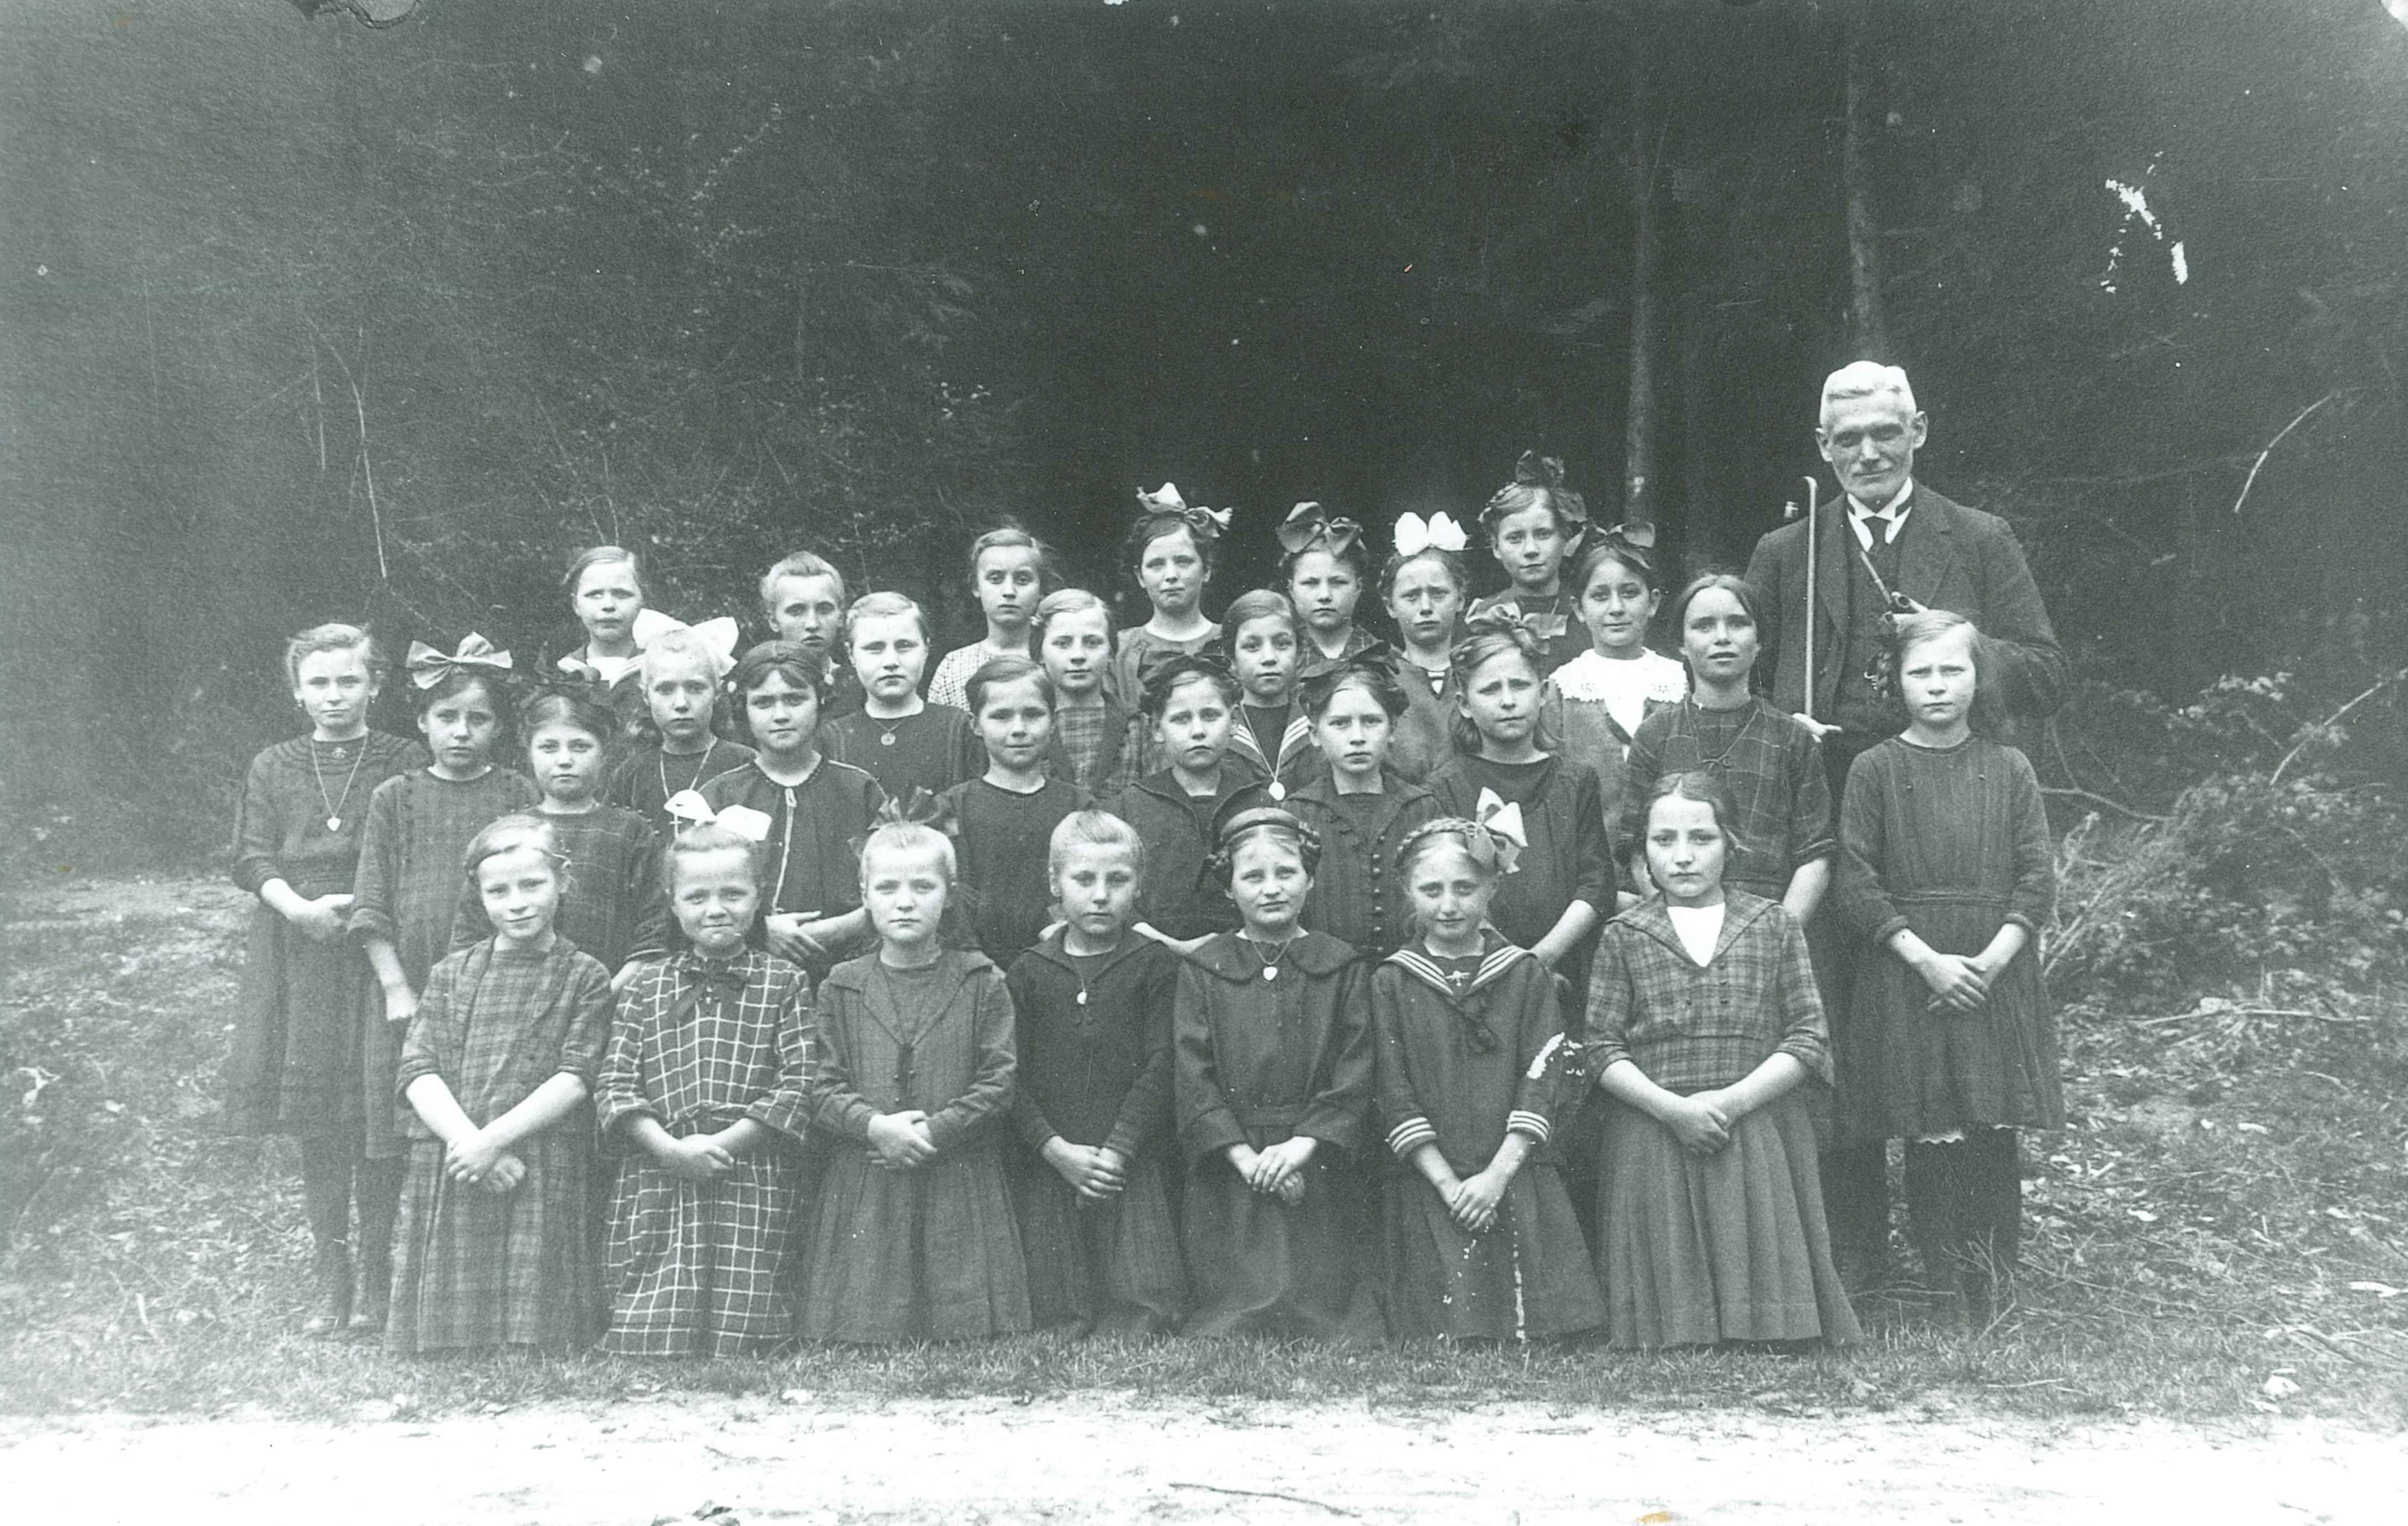 Klassenfoto, katholische Schule "Schönblick", Bendorf-Stromberg, 1924 (REM CC BY-NC-SA)